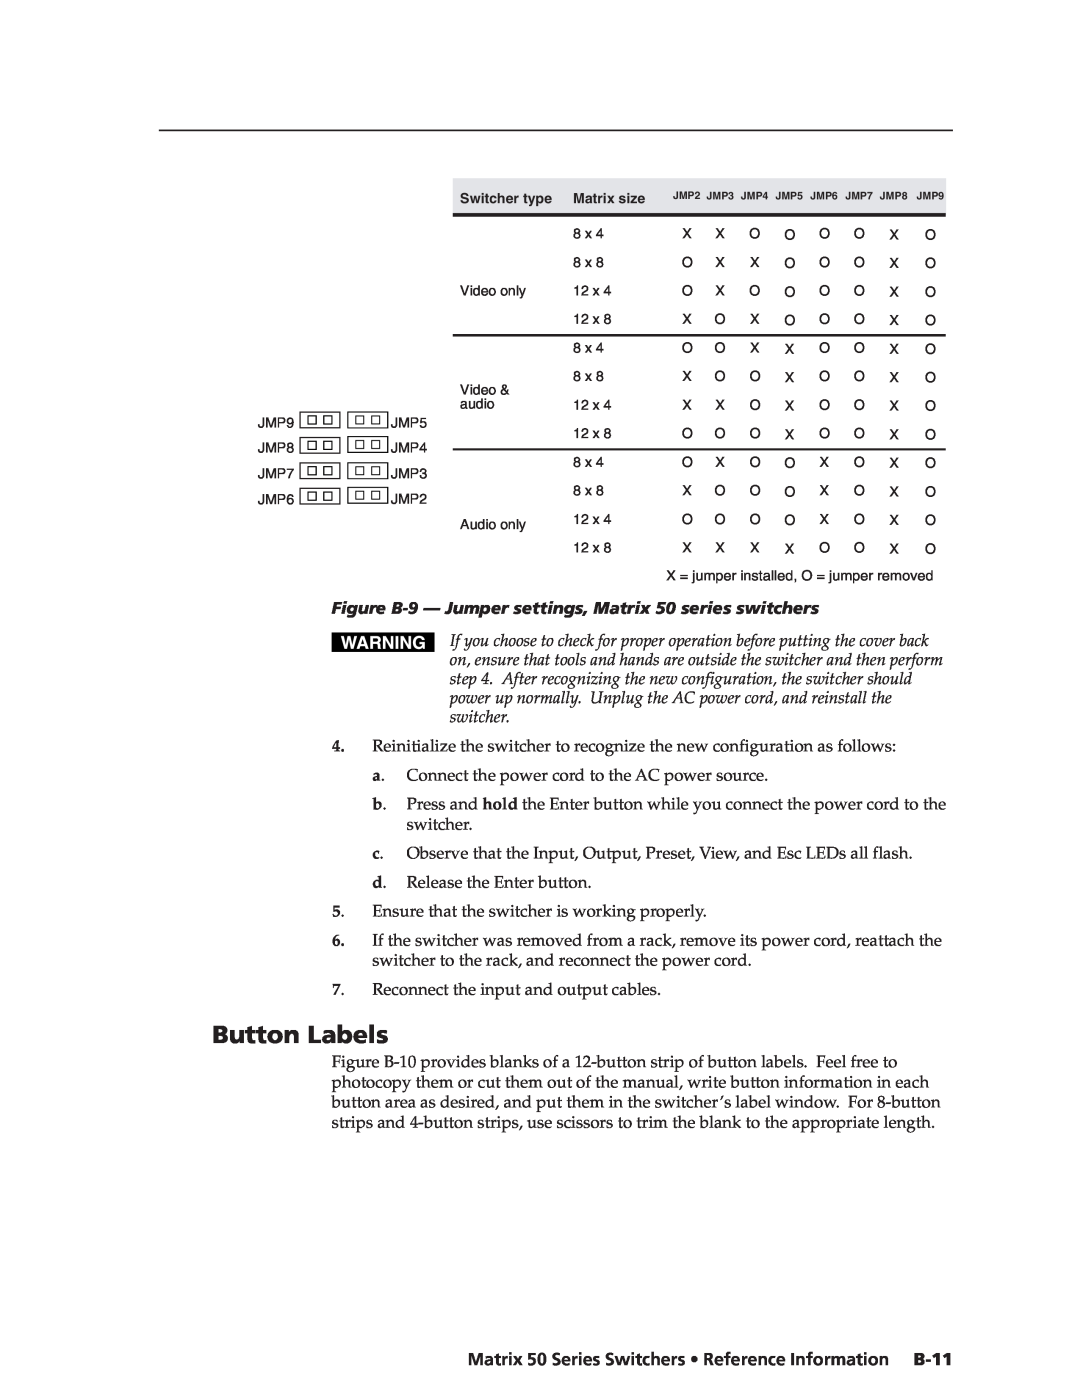 Extron electronic manual Button Labels, Figure B-9 - Jumper settings, Matrix 50 series switchers 